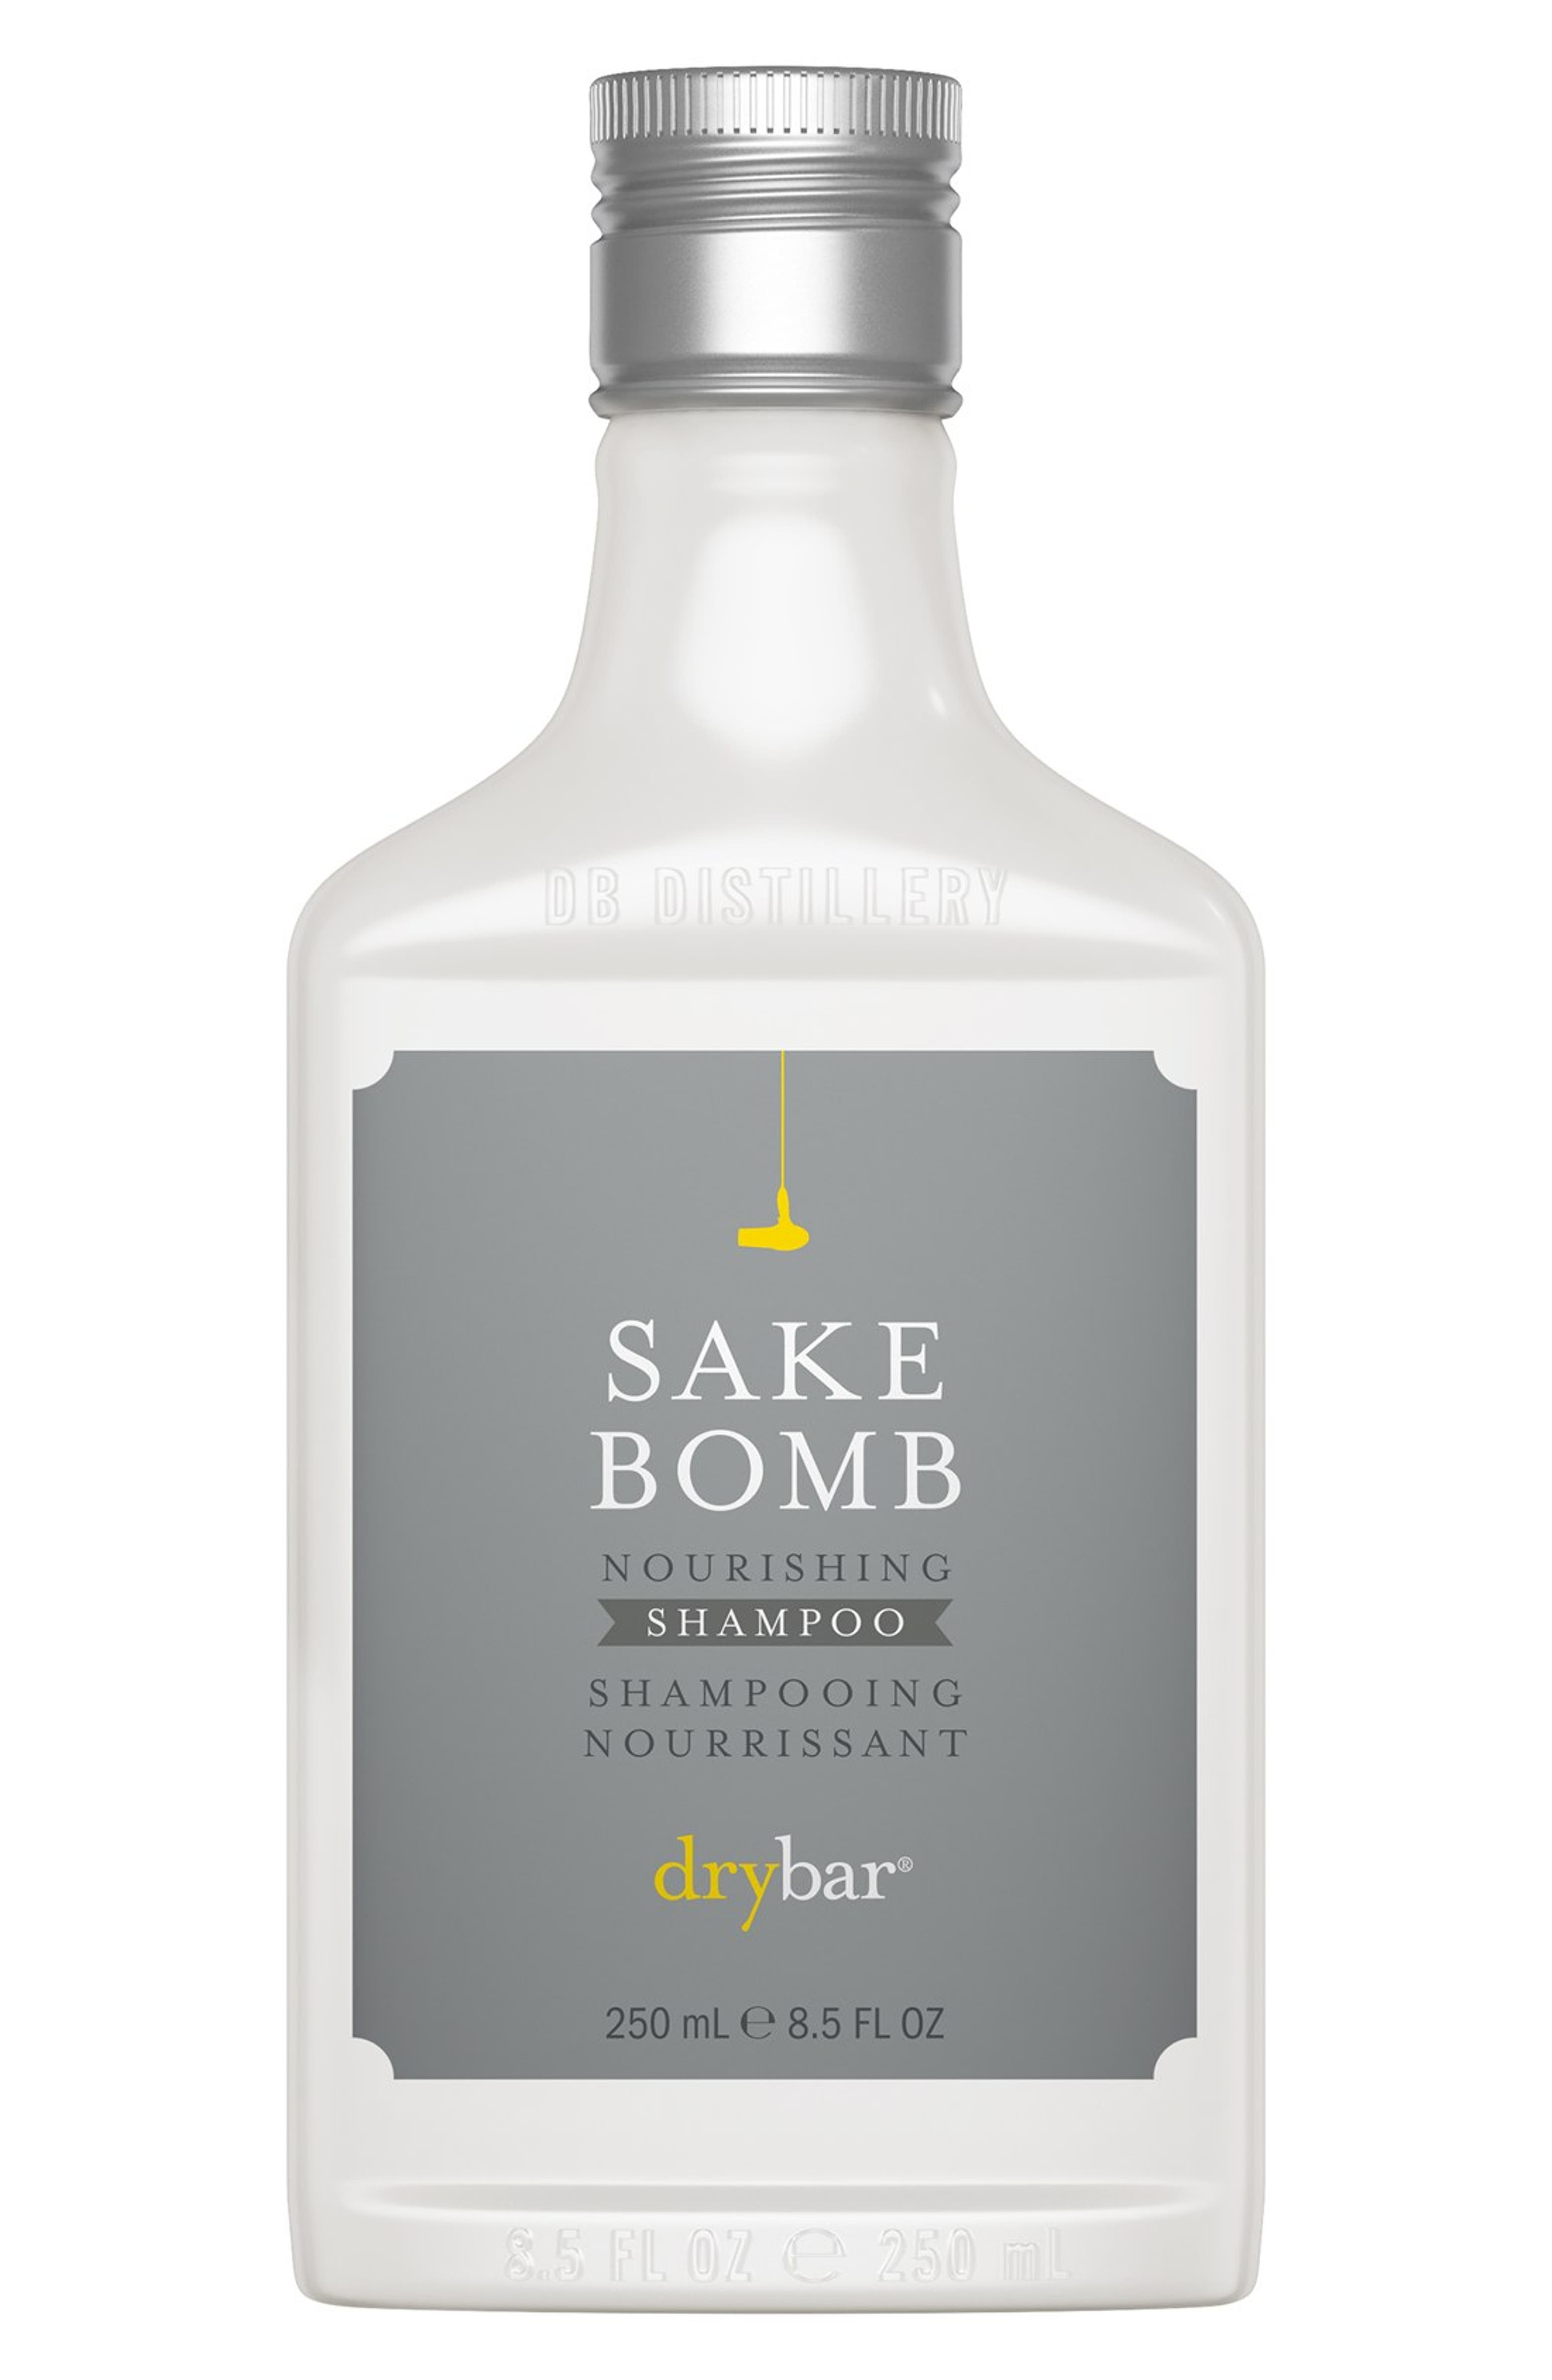 Drybar Sake Bomb Nourishing Shampoo Nordstrom